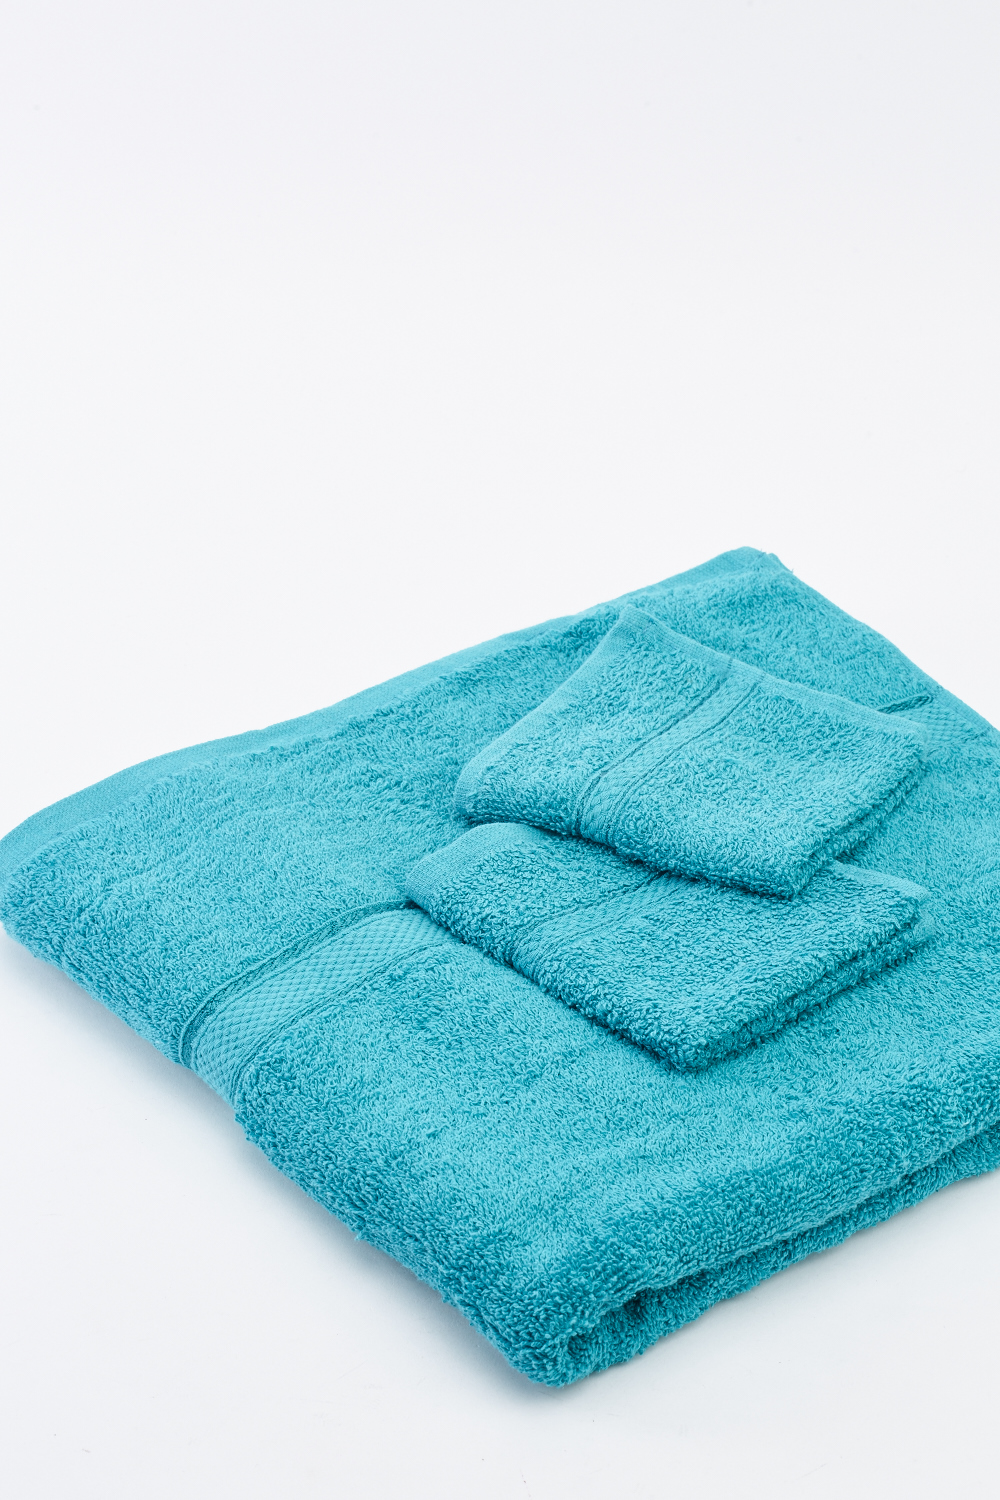 Teal Cotton 3 Piece Towel Set - Just $7